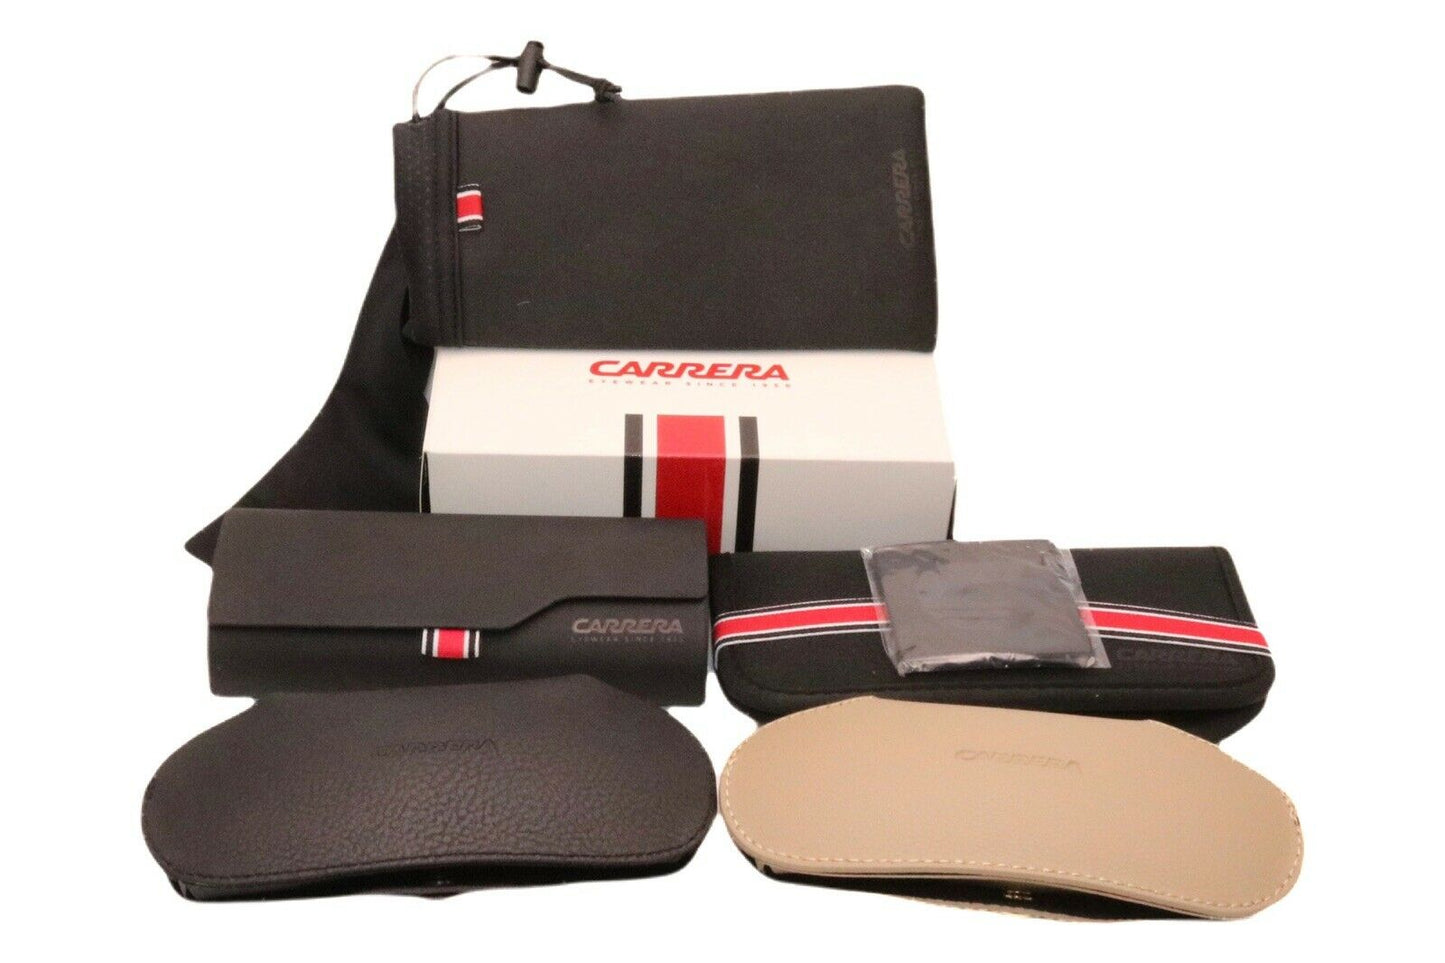 Carrera CARRERA 8848-0003 00 55mm New Eyeglasses